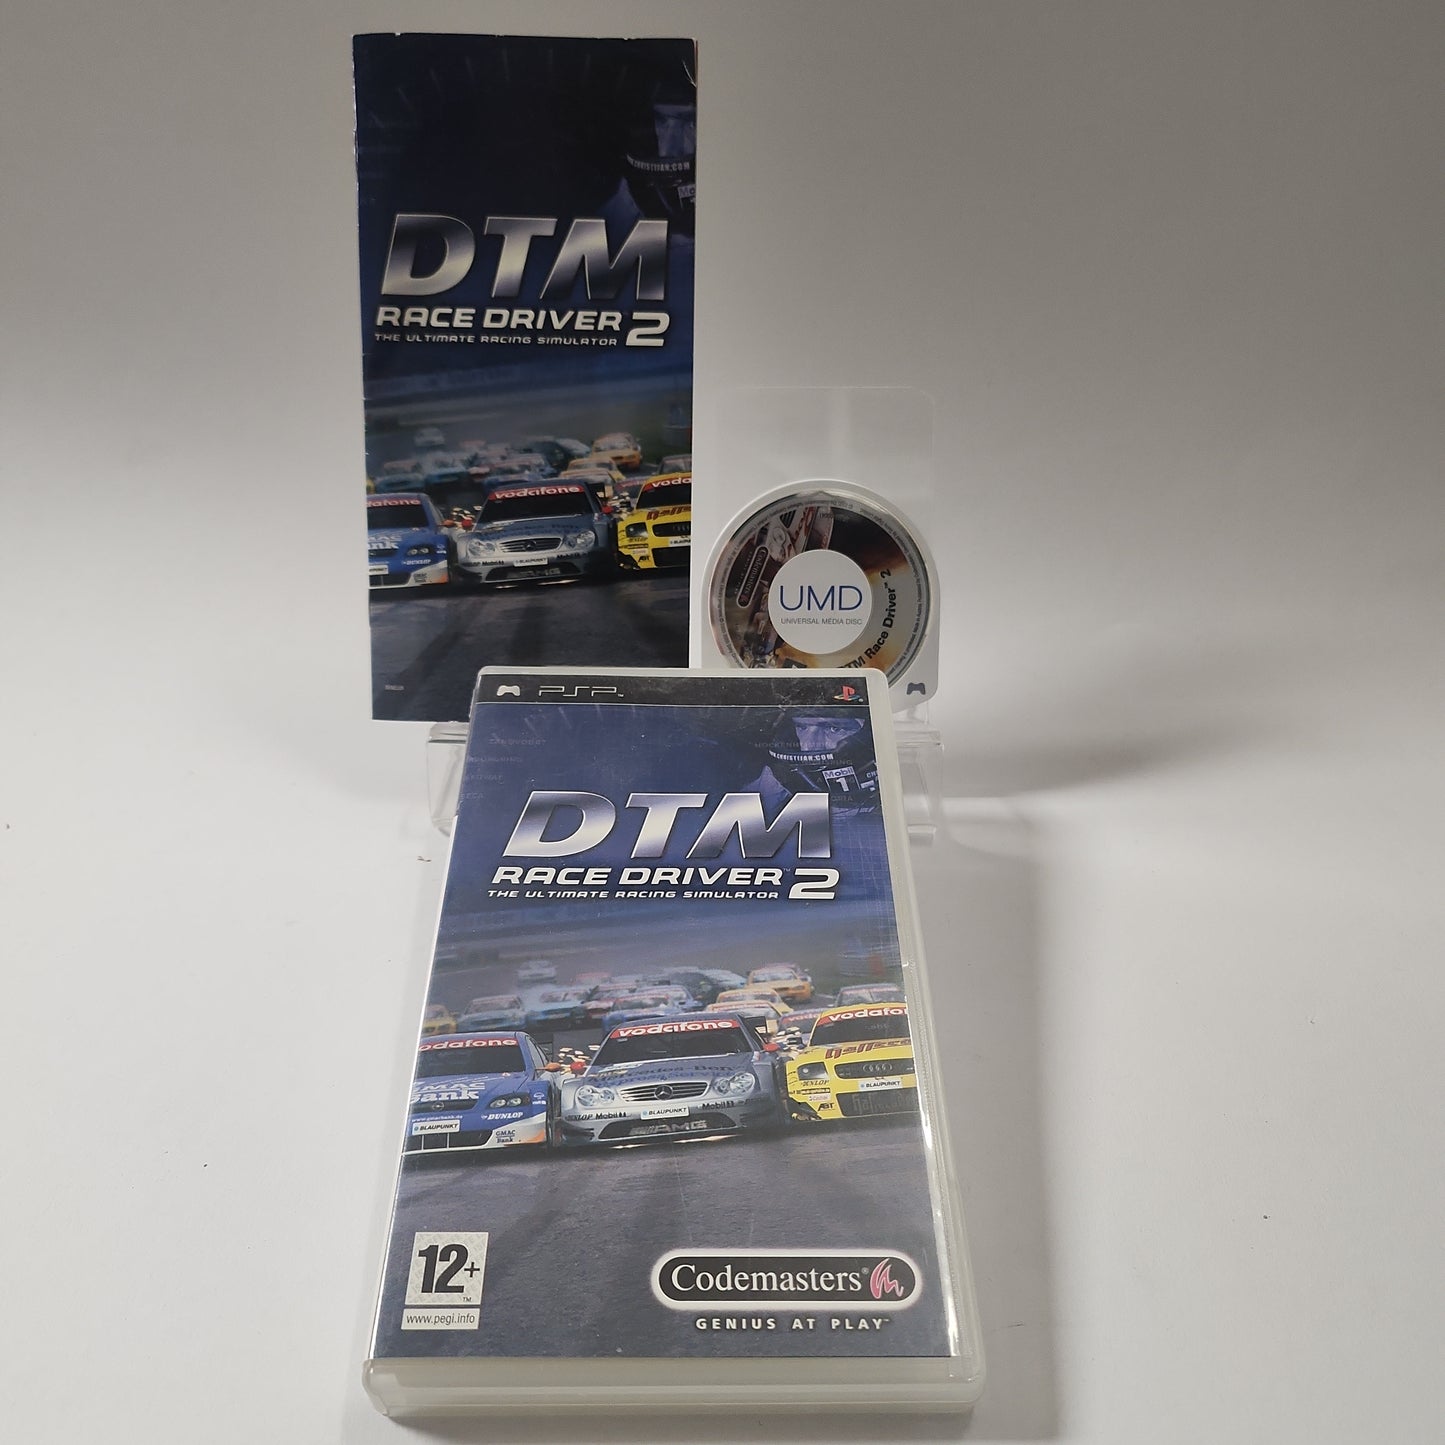 DTM Race Driver 2 Playstation Portable